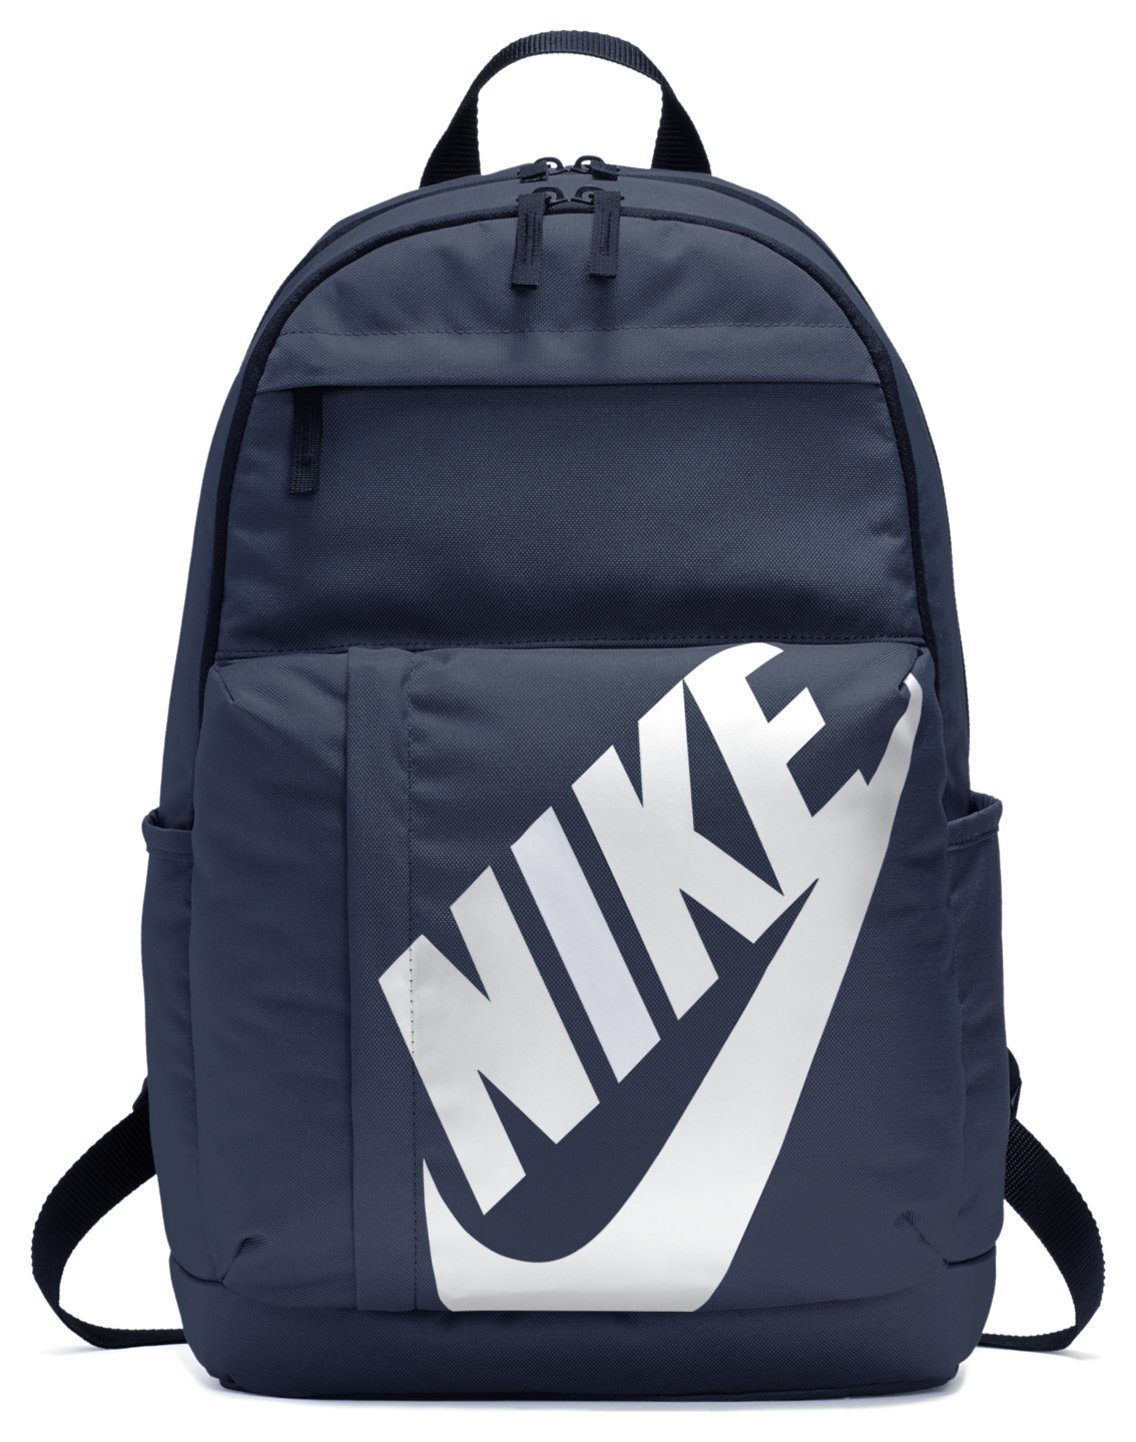 Nike Elemental Backpack - Navy